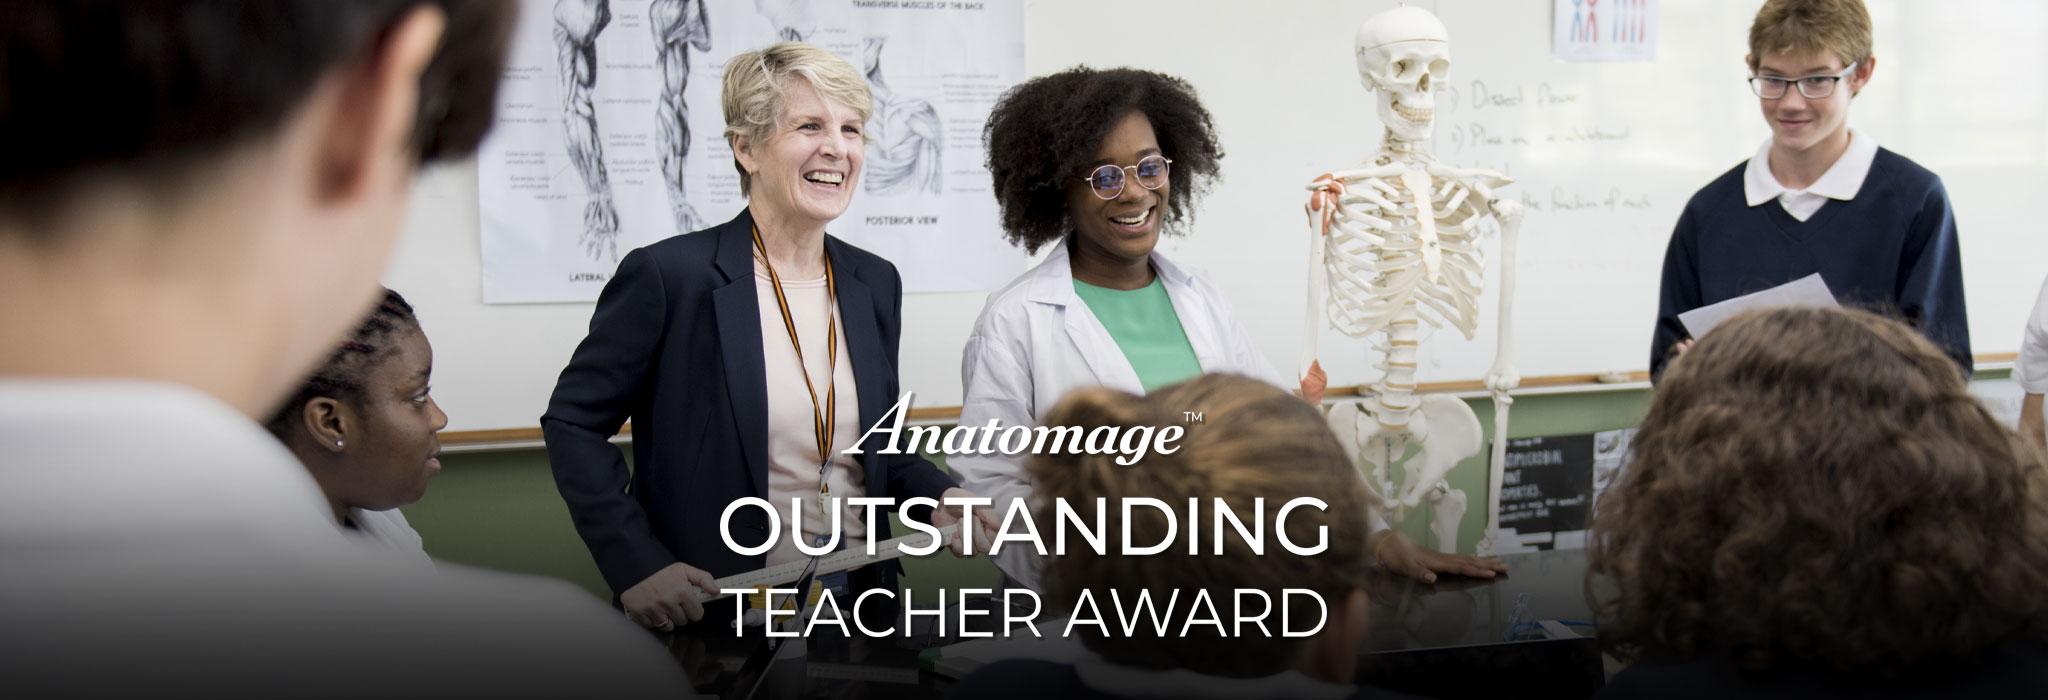 Anatomage Outstanding Teacher Award